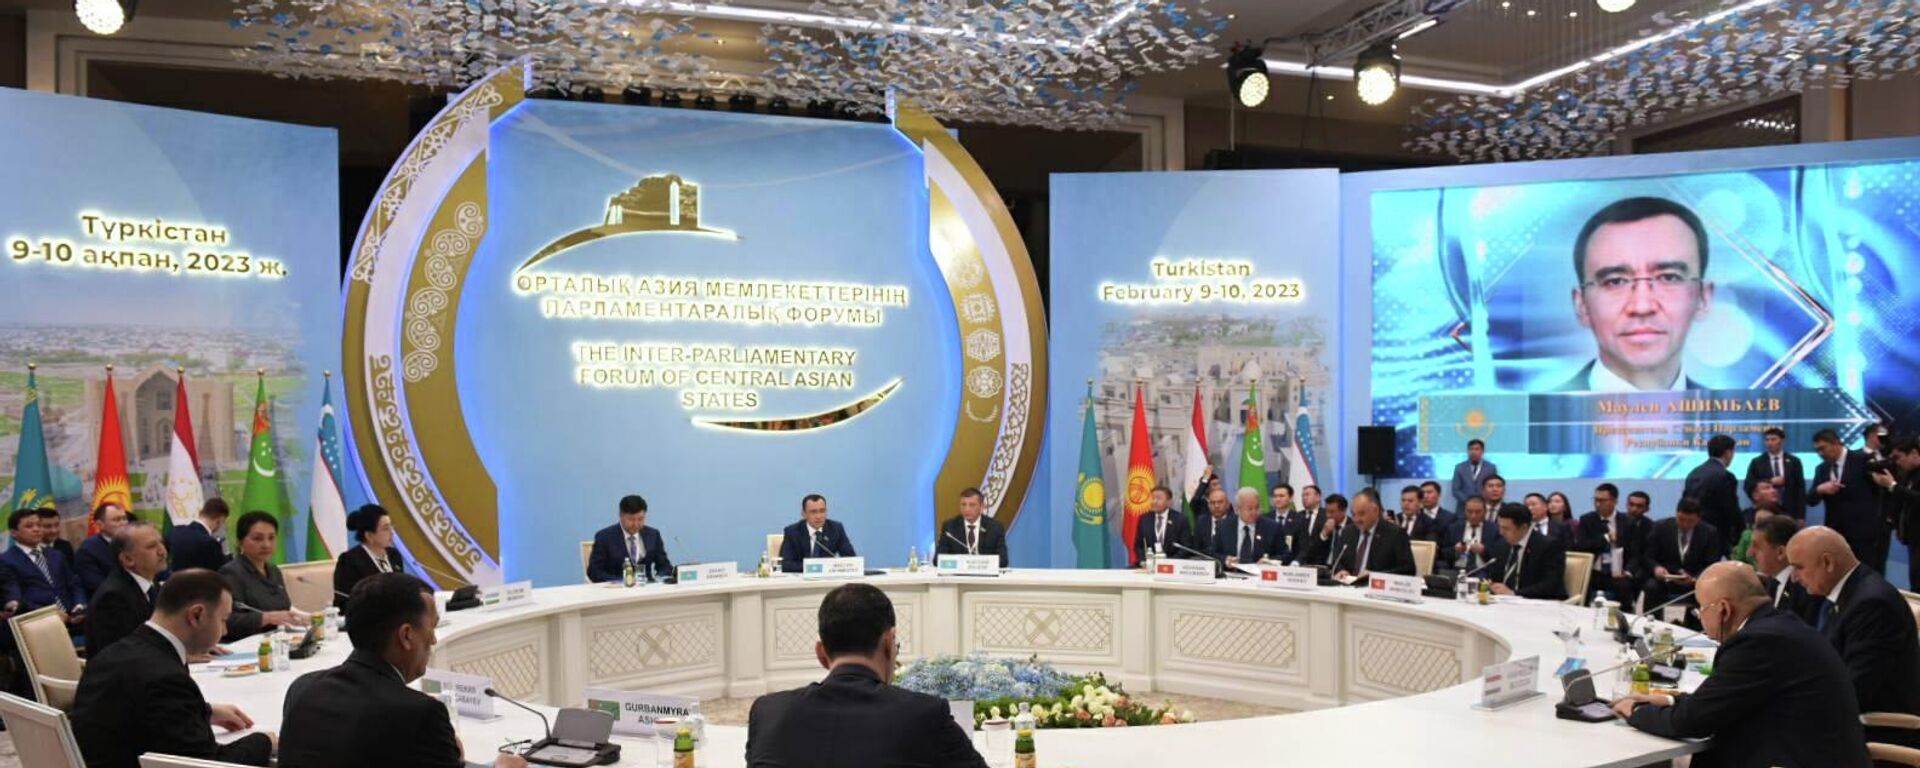 В Туркестане начался I межпарламентский форум - Sputnik Казахстан, 1920, 10.02.2023